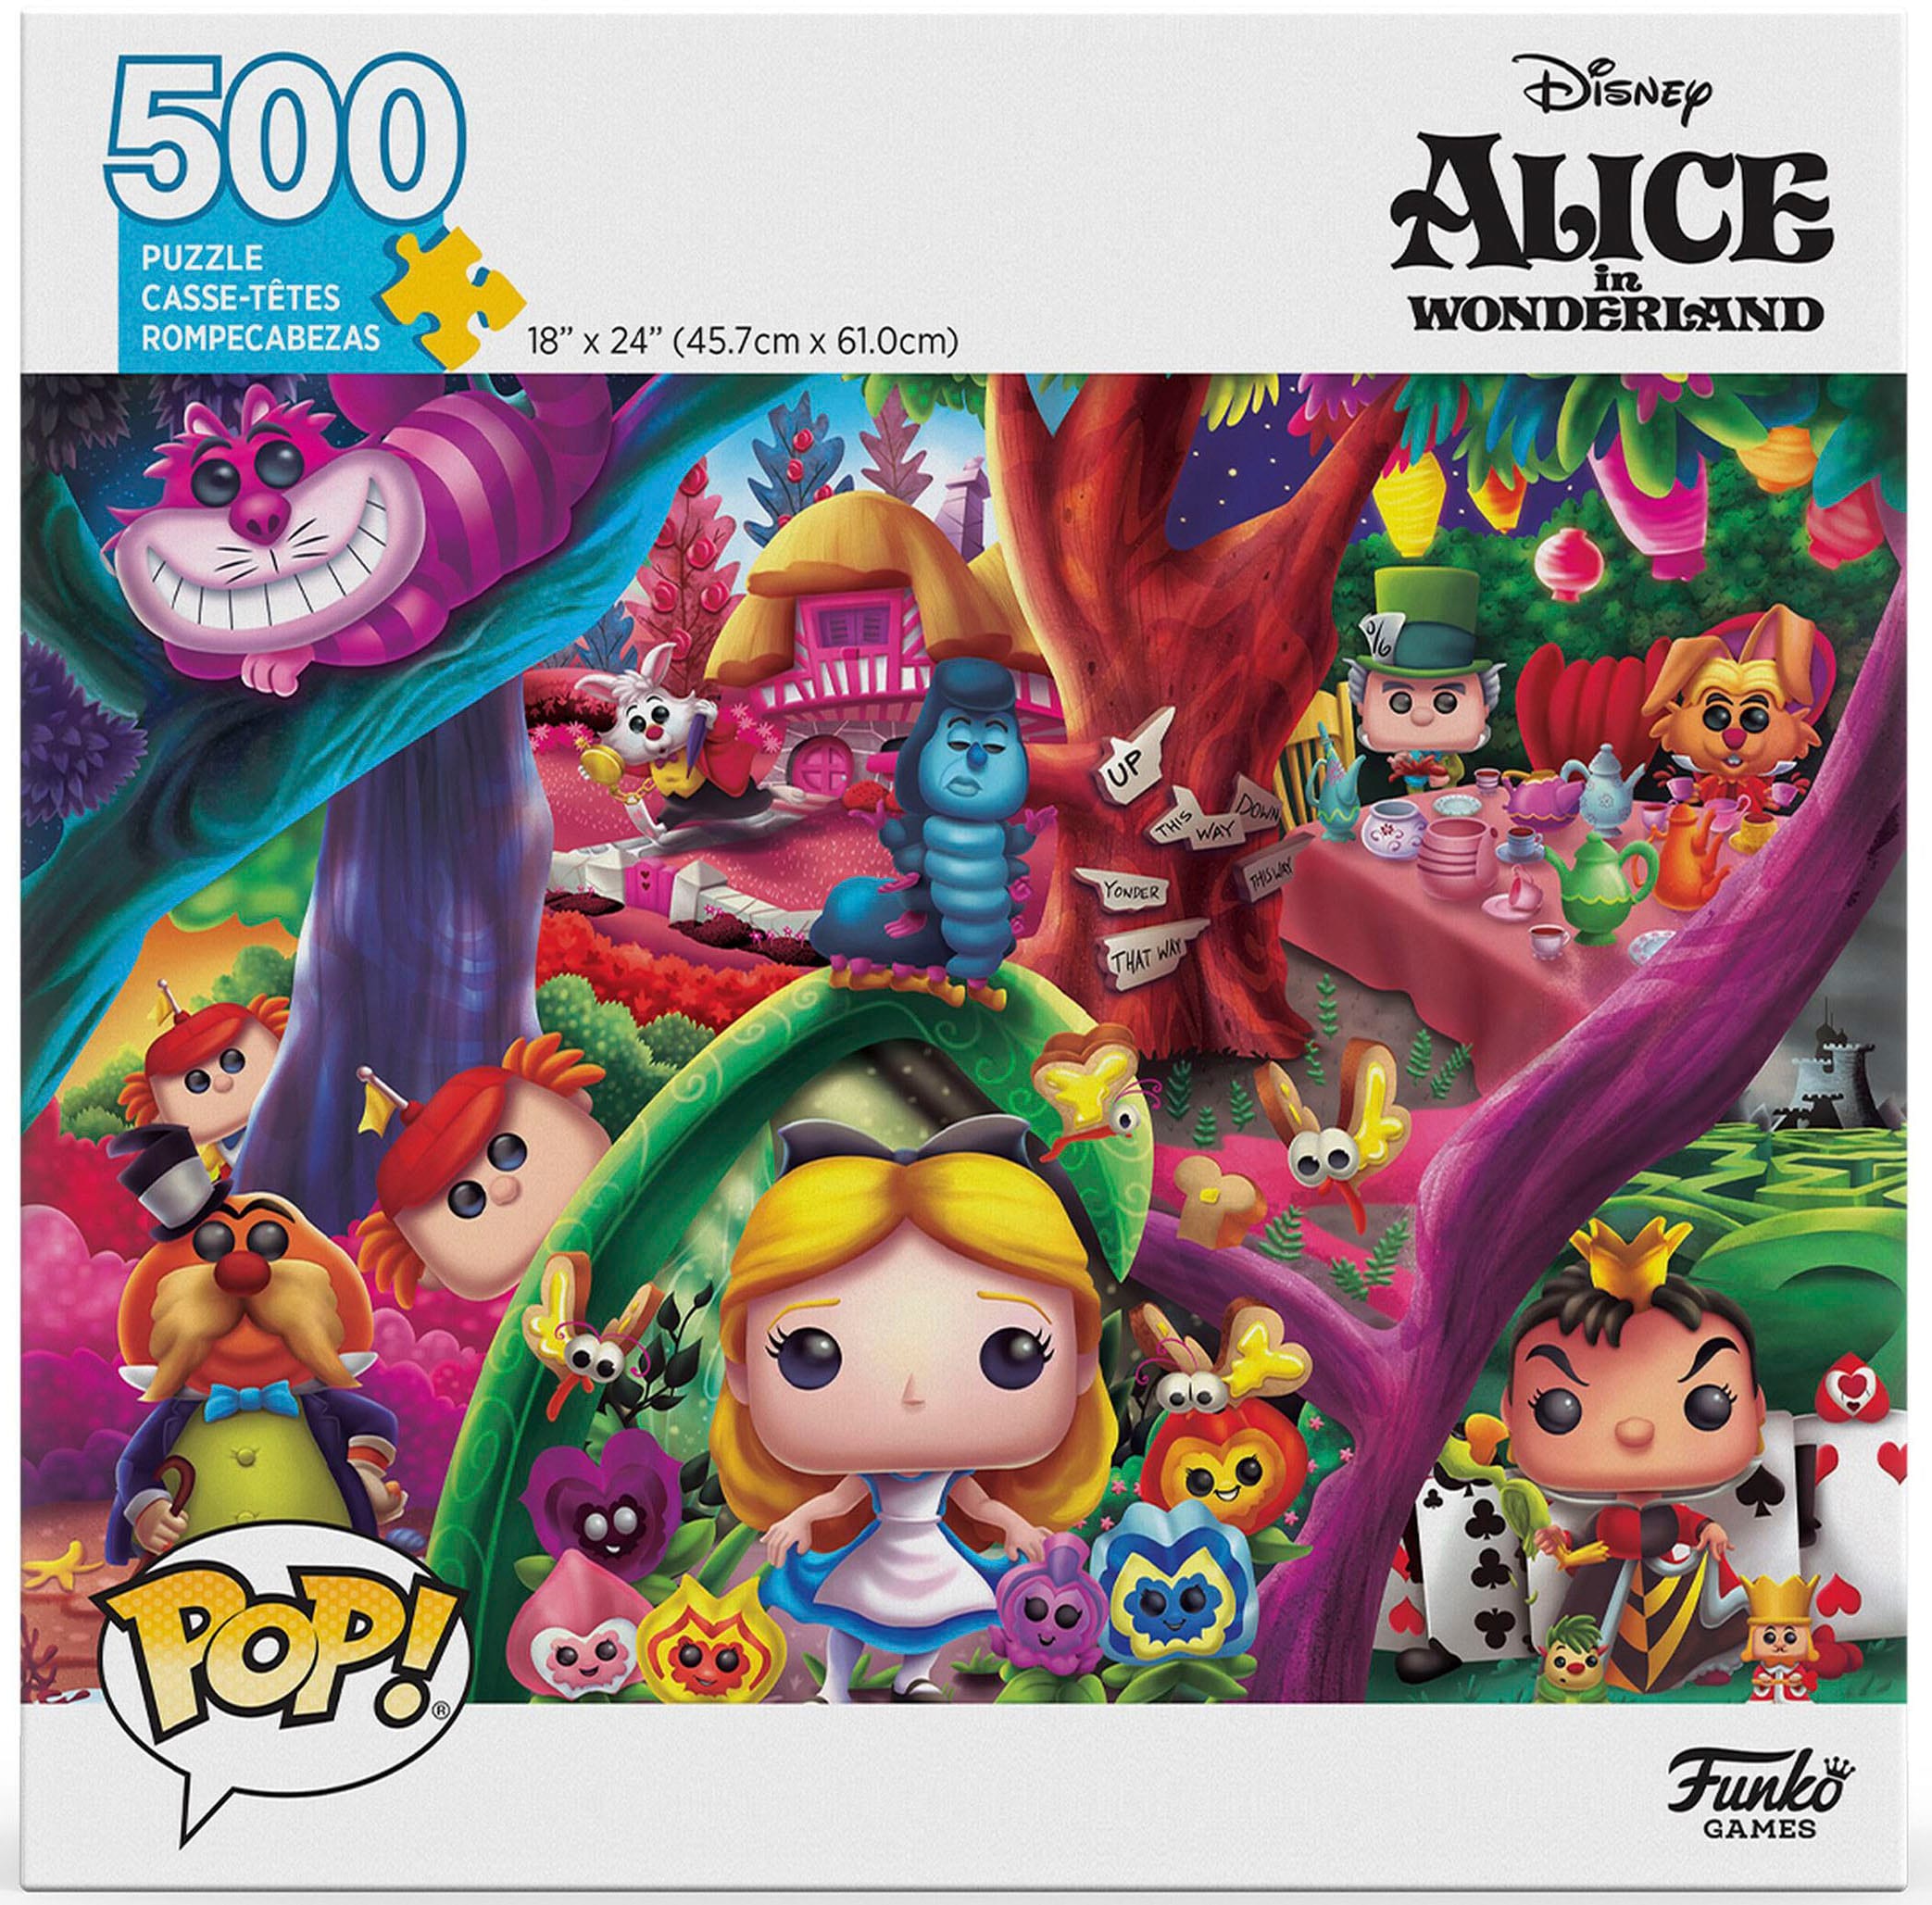 Funko GAMES Puzzle »Pop!, Alice in Wonderland«